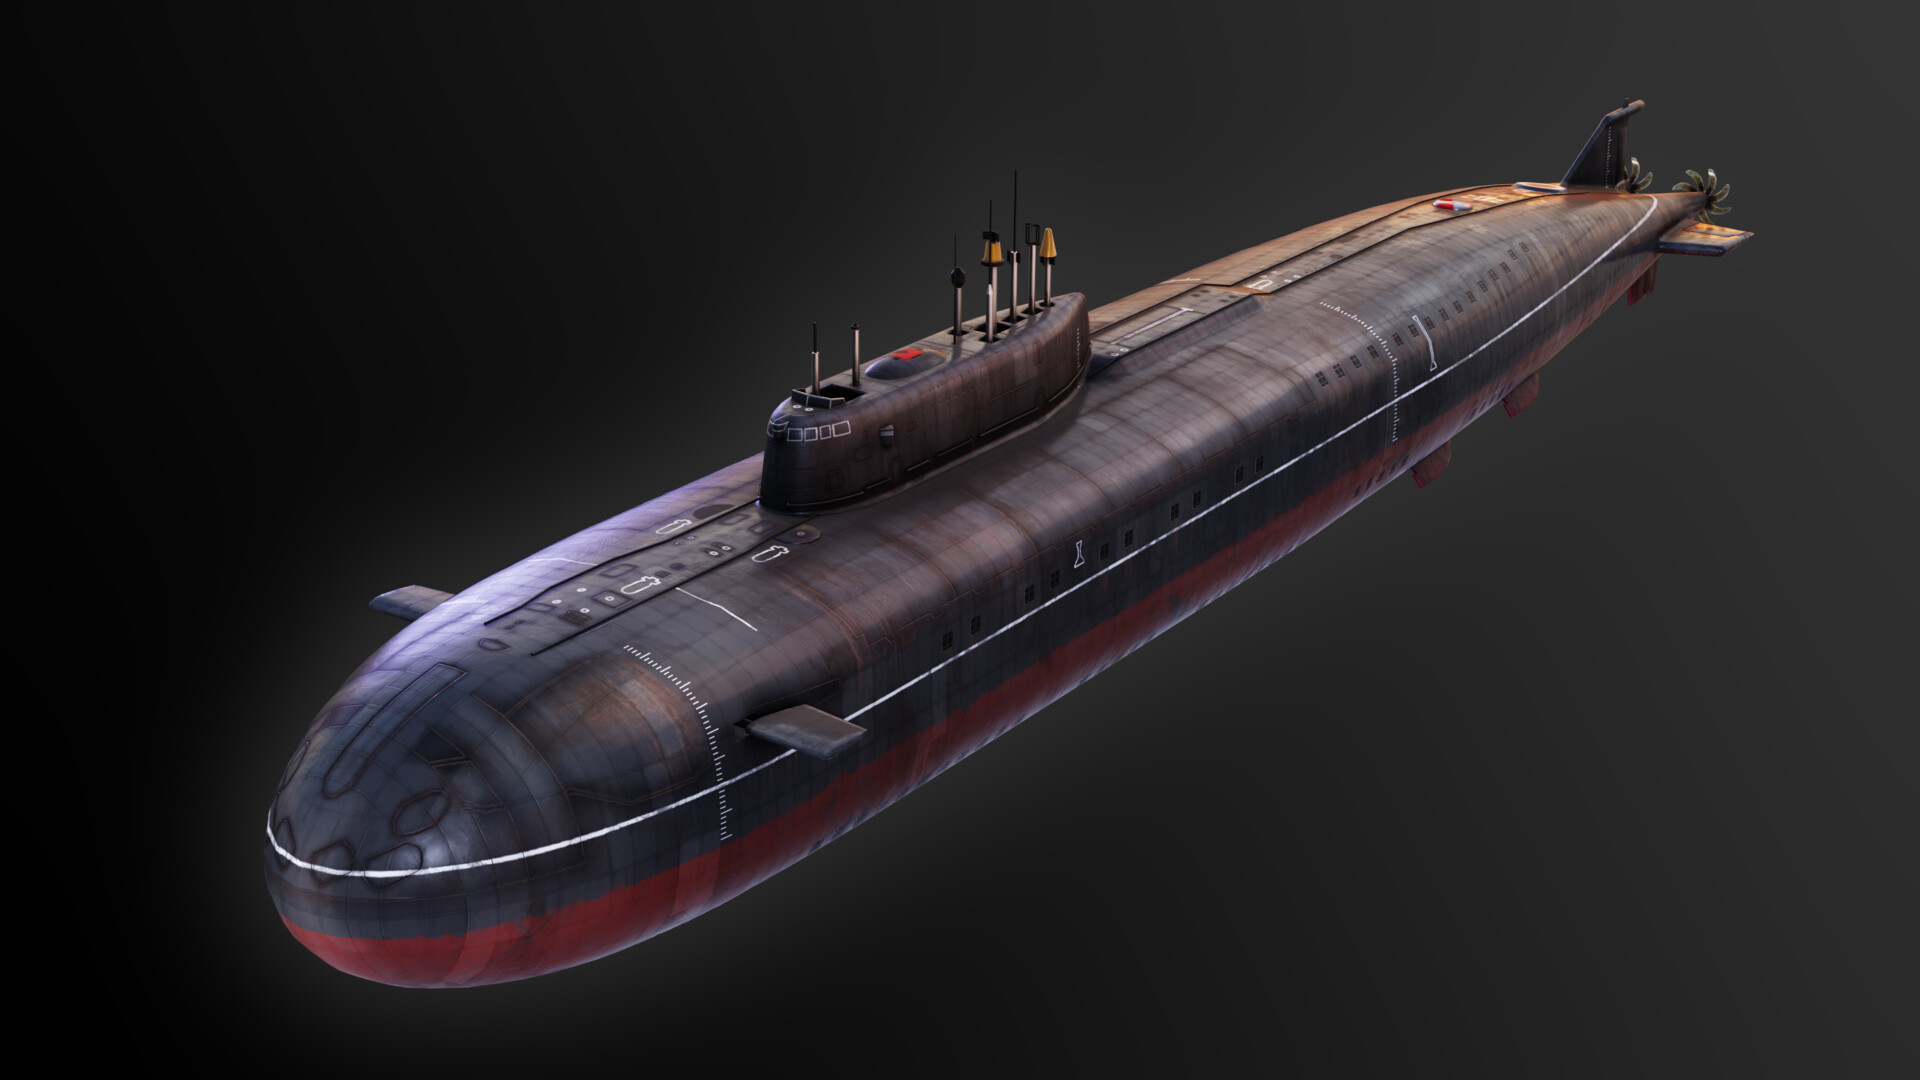 Пл ка. Подводные лодки проекта 949а «Антей». 949 Проект подводная лодка Курск. Подводная лодка 941 акула. Подводная лодка 667а.